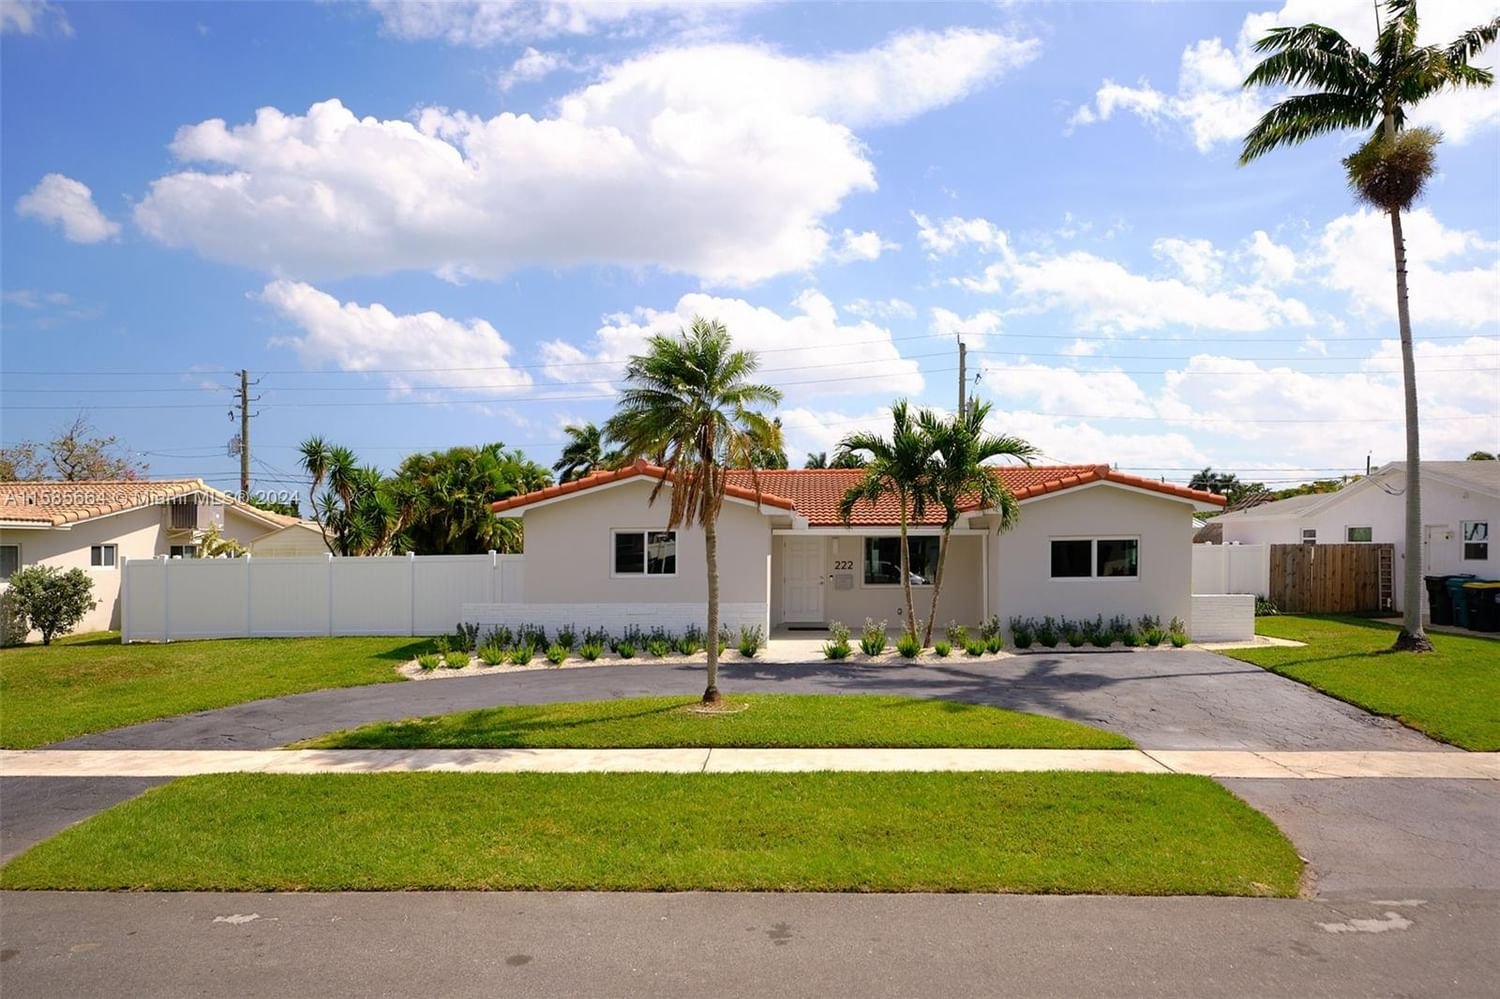 Real estate property located at 222 3rd Pl, Broward County, DALTON VIEW, Dania Beach, FL